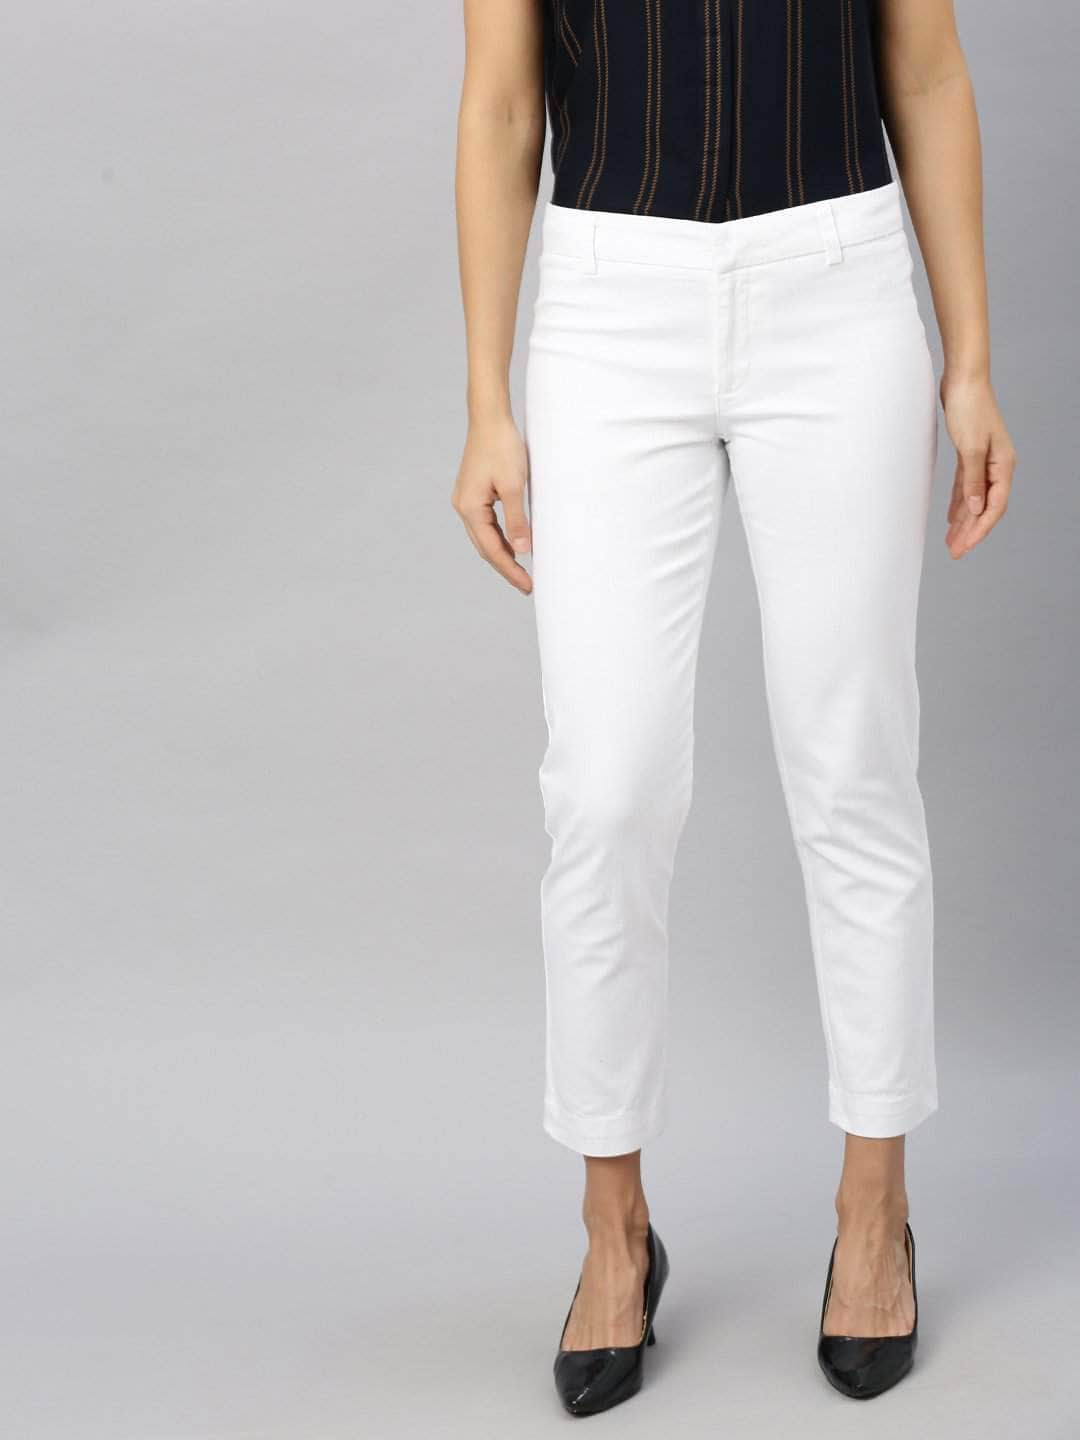 Women's White Jeans - Wide Leg, Slim & Straight | NYDJ Apparel